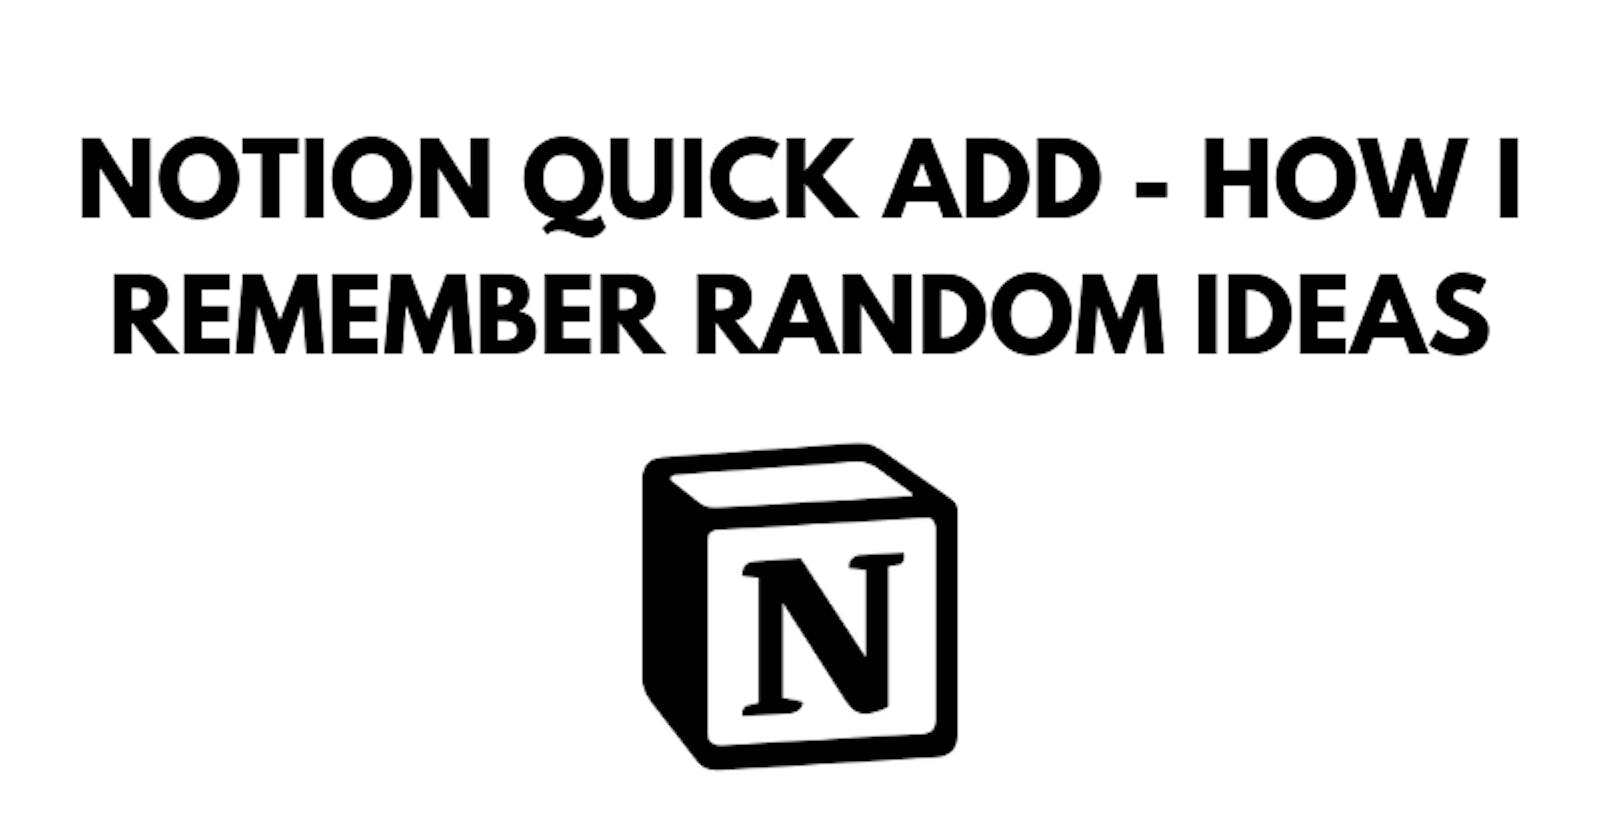 Notion Quick Add - How I Remember Random Ideas